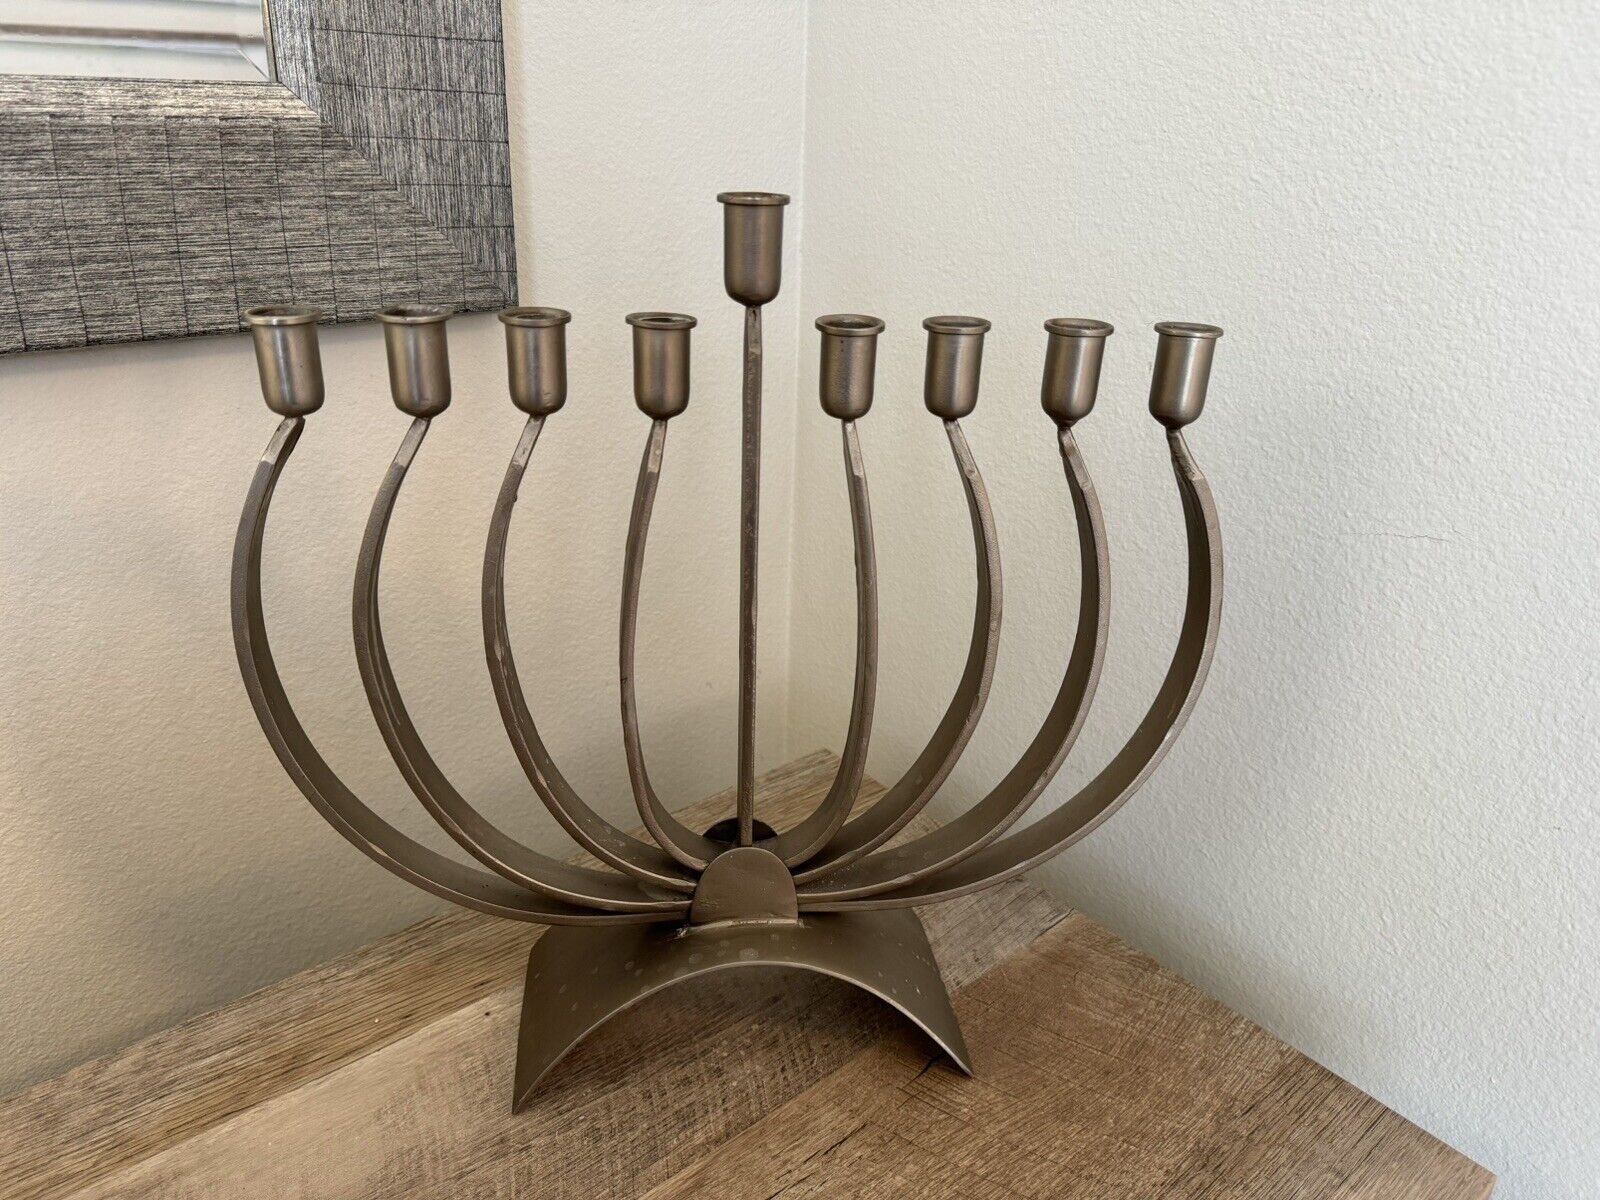 Godingers Silver Metal Modern Menorah Hanukah Holiday Jewish Candle Holder